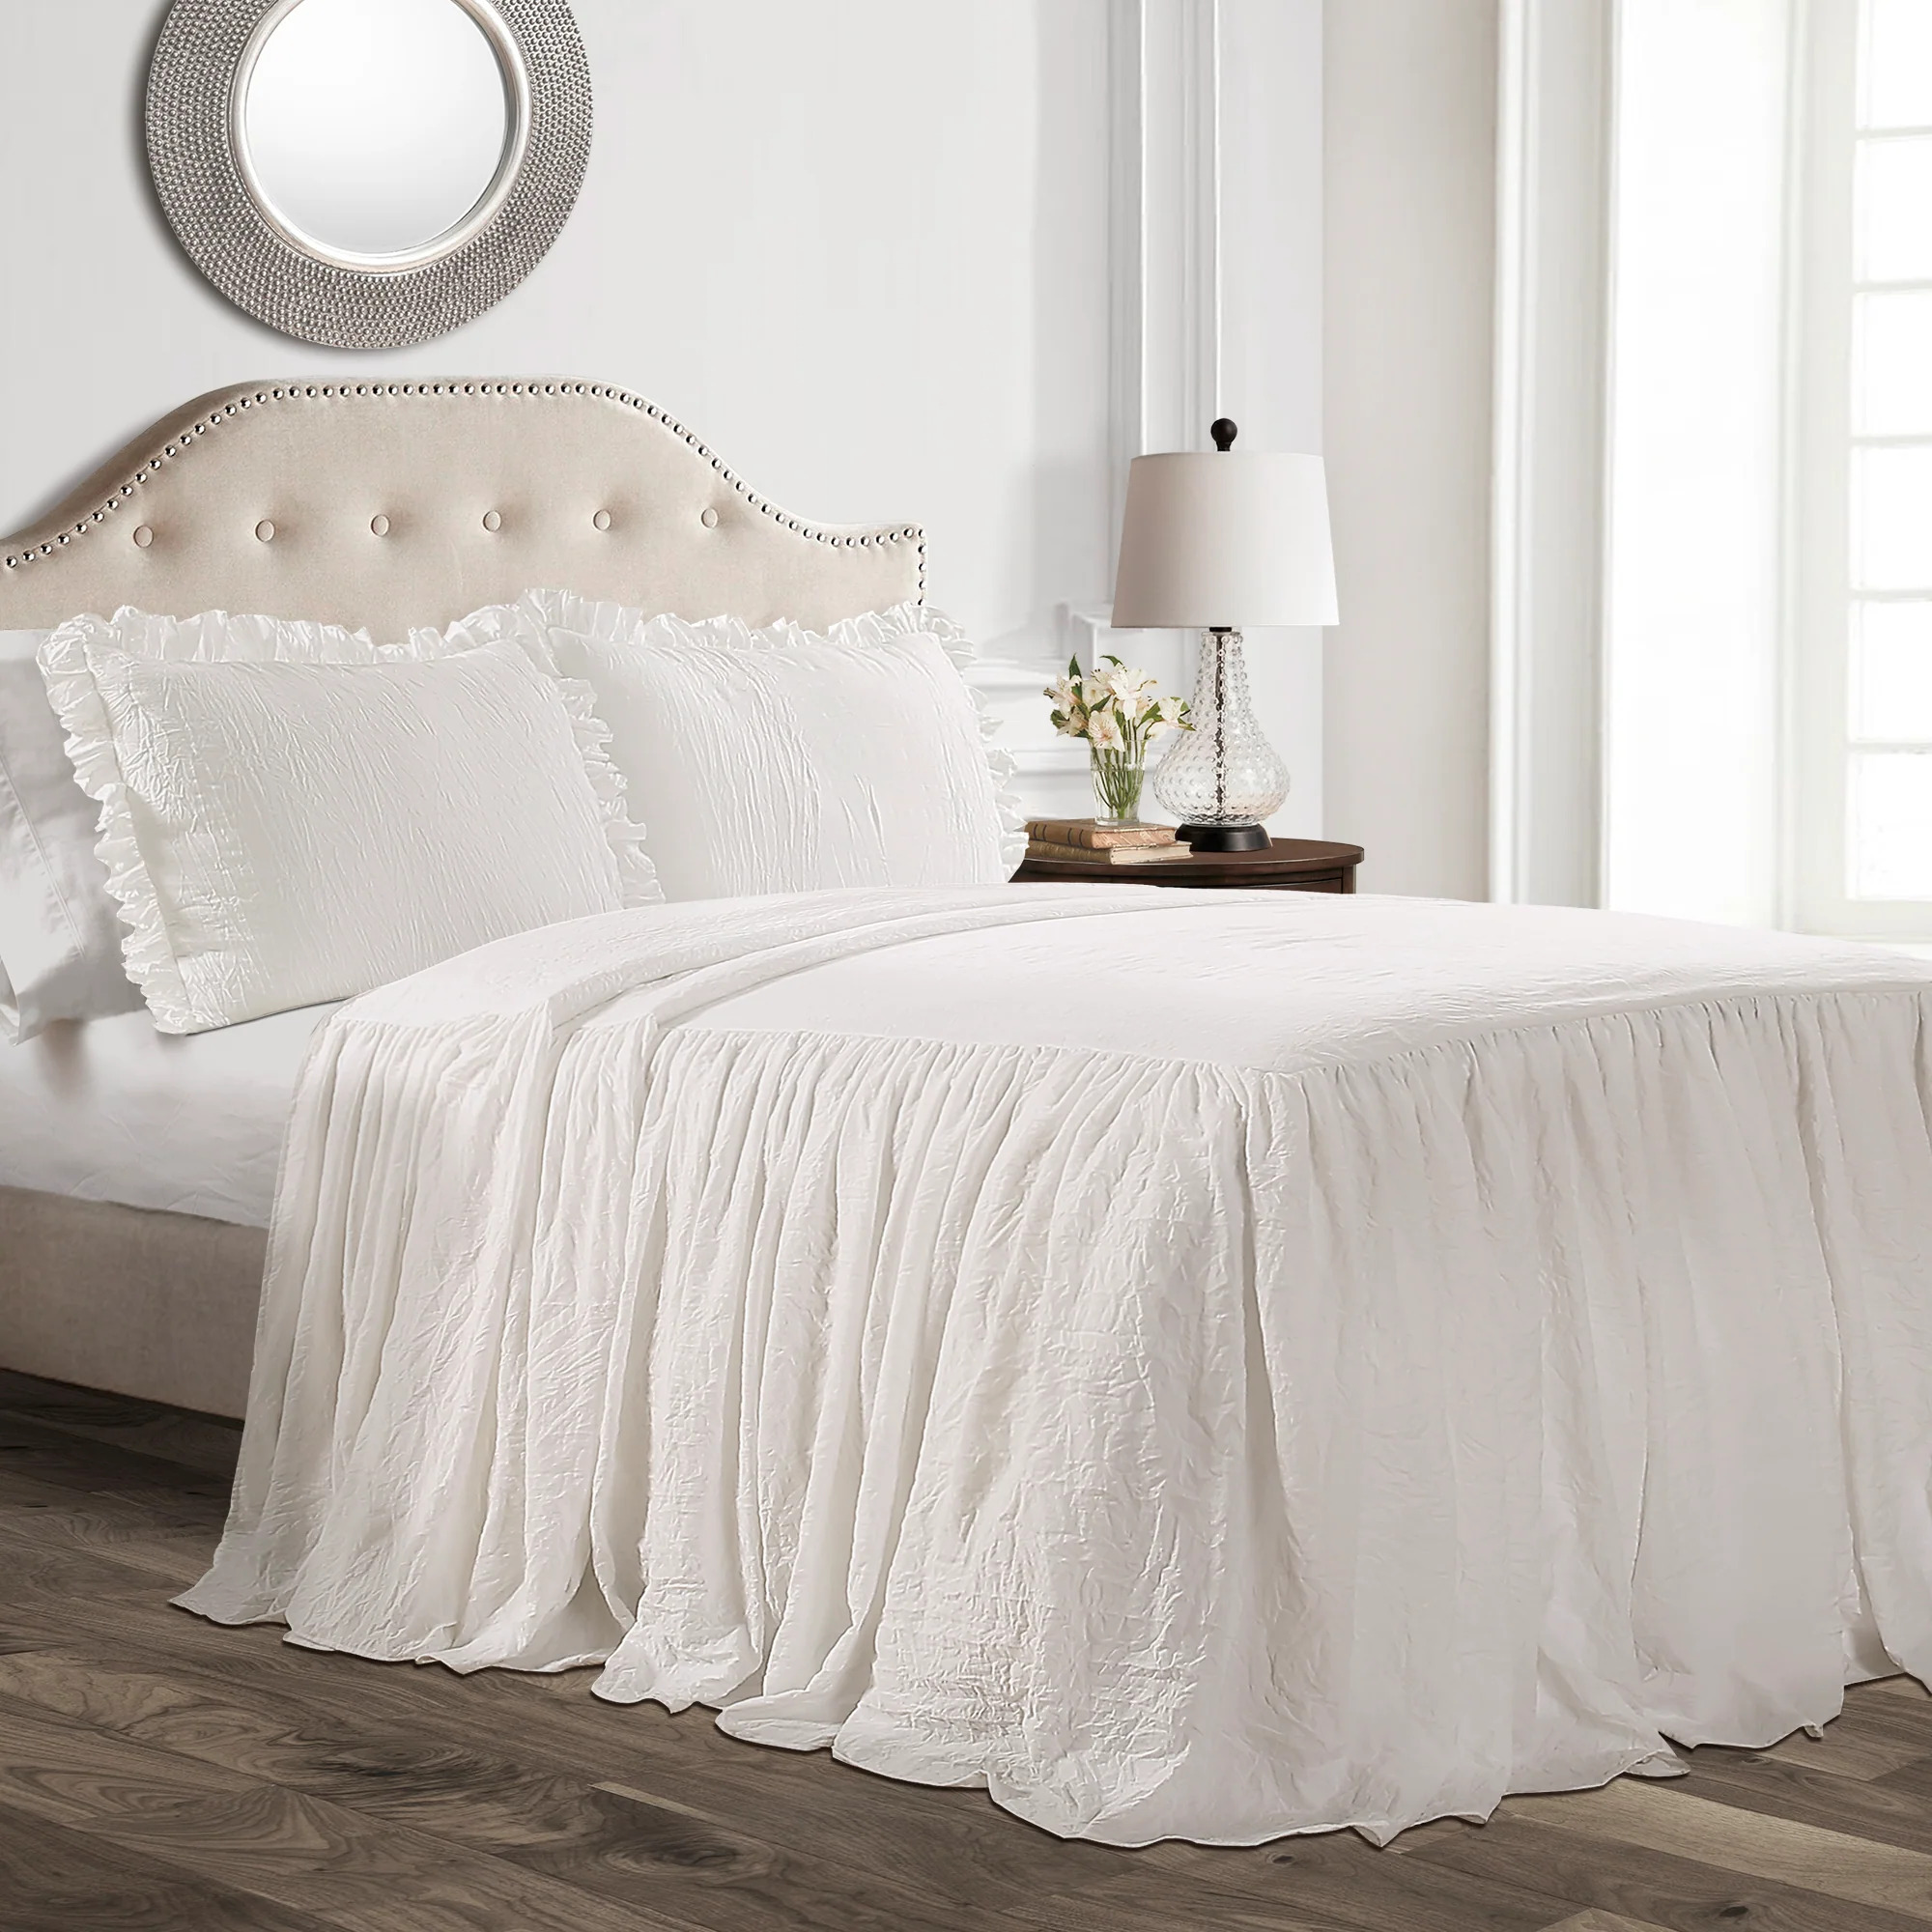 Lush Decor Ruffle Skirt Bedspread, King, White, 3-Pc Set - image 1 of 11